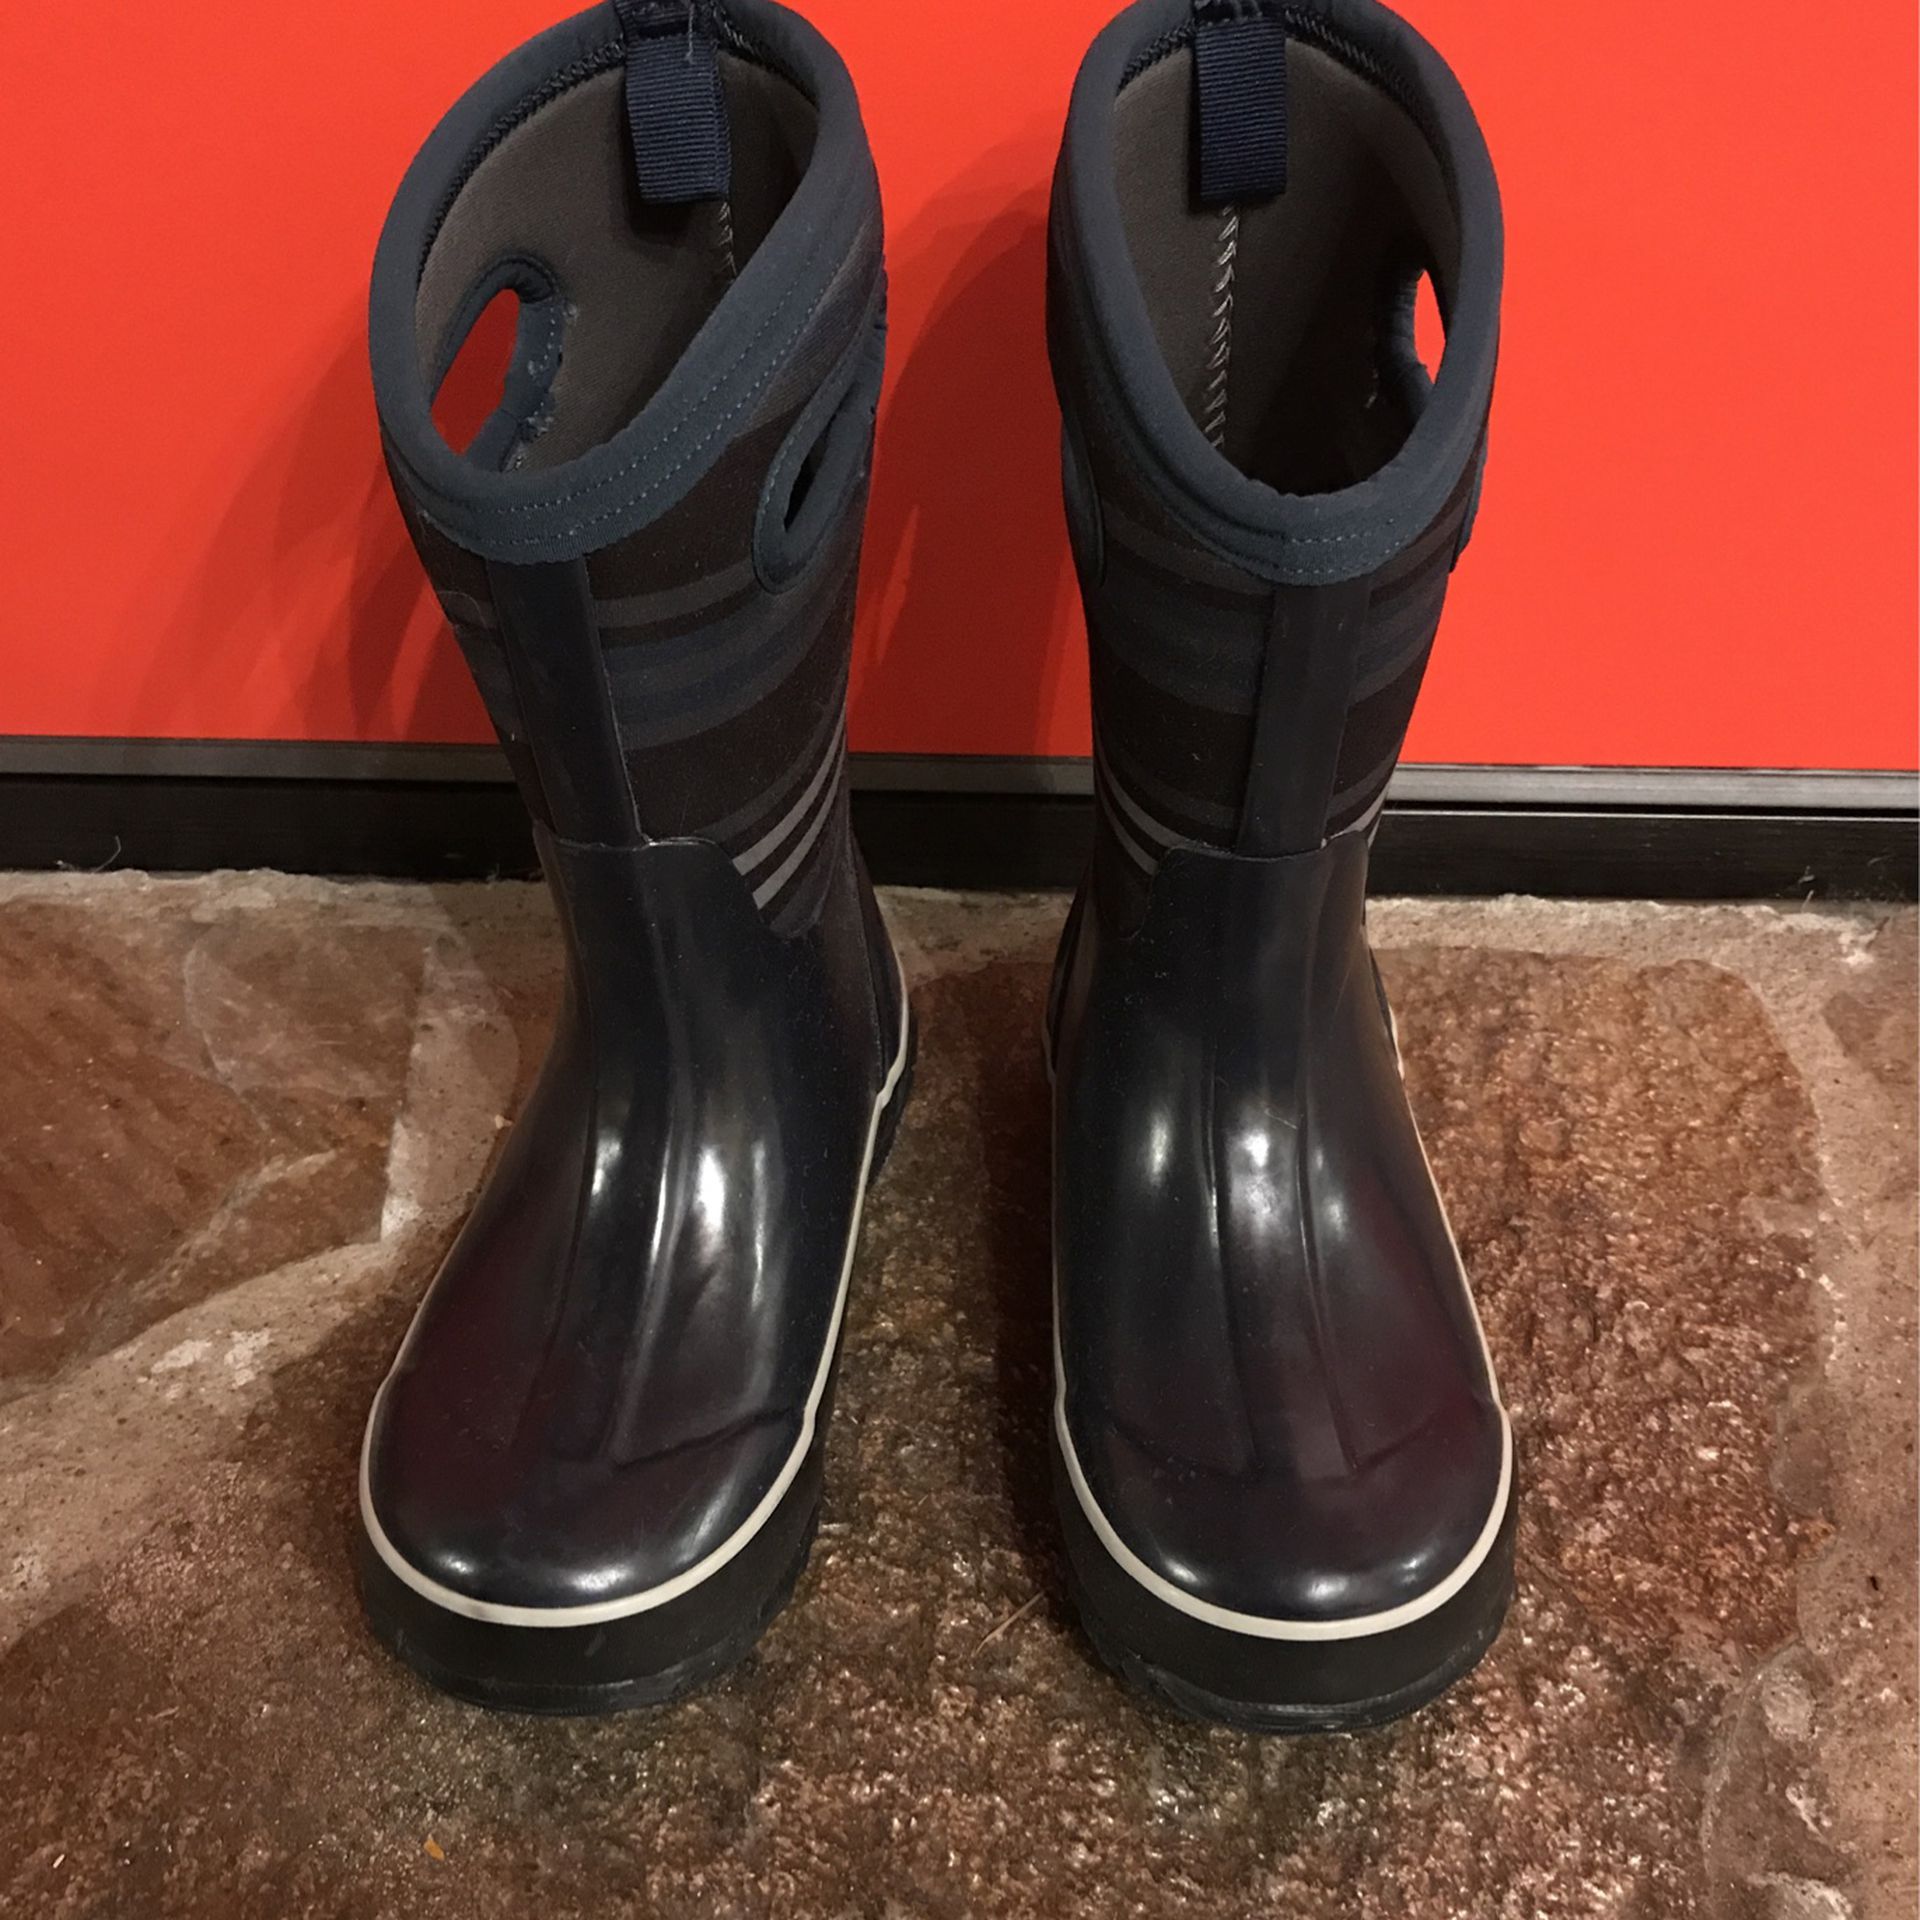 Bogs Snow Rain Waterproof boots Shoes Black Navy Grey Sz 1 Kids Youth Barely Worn